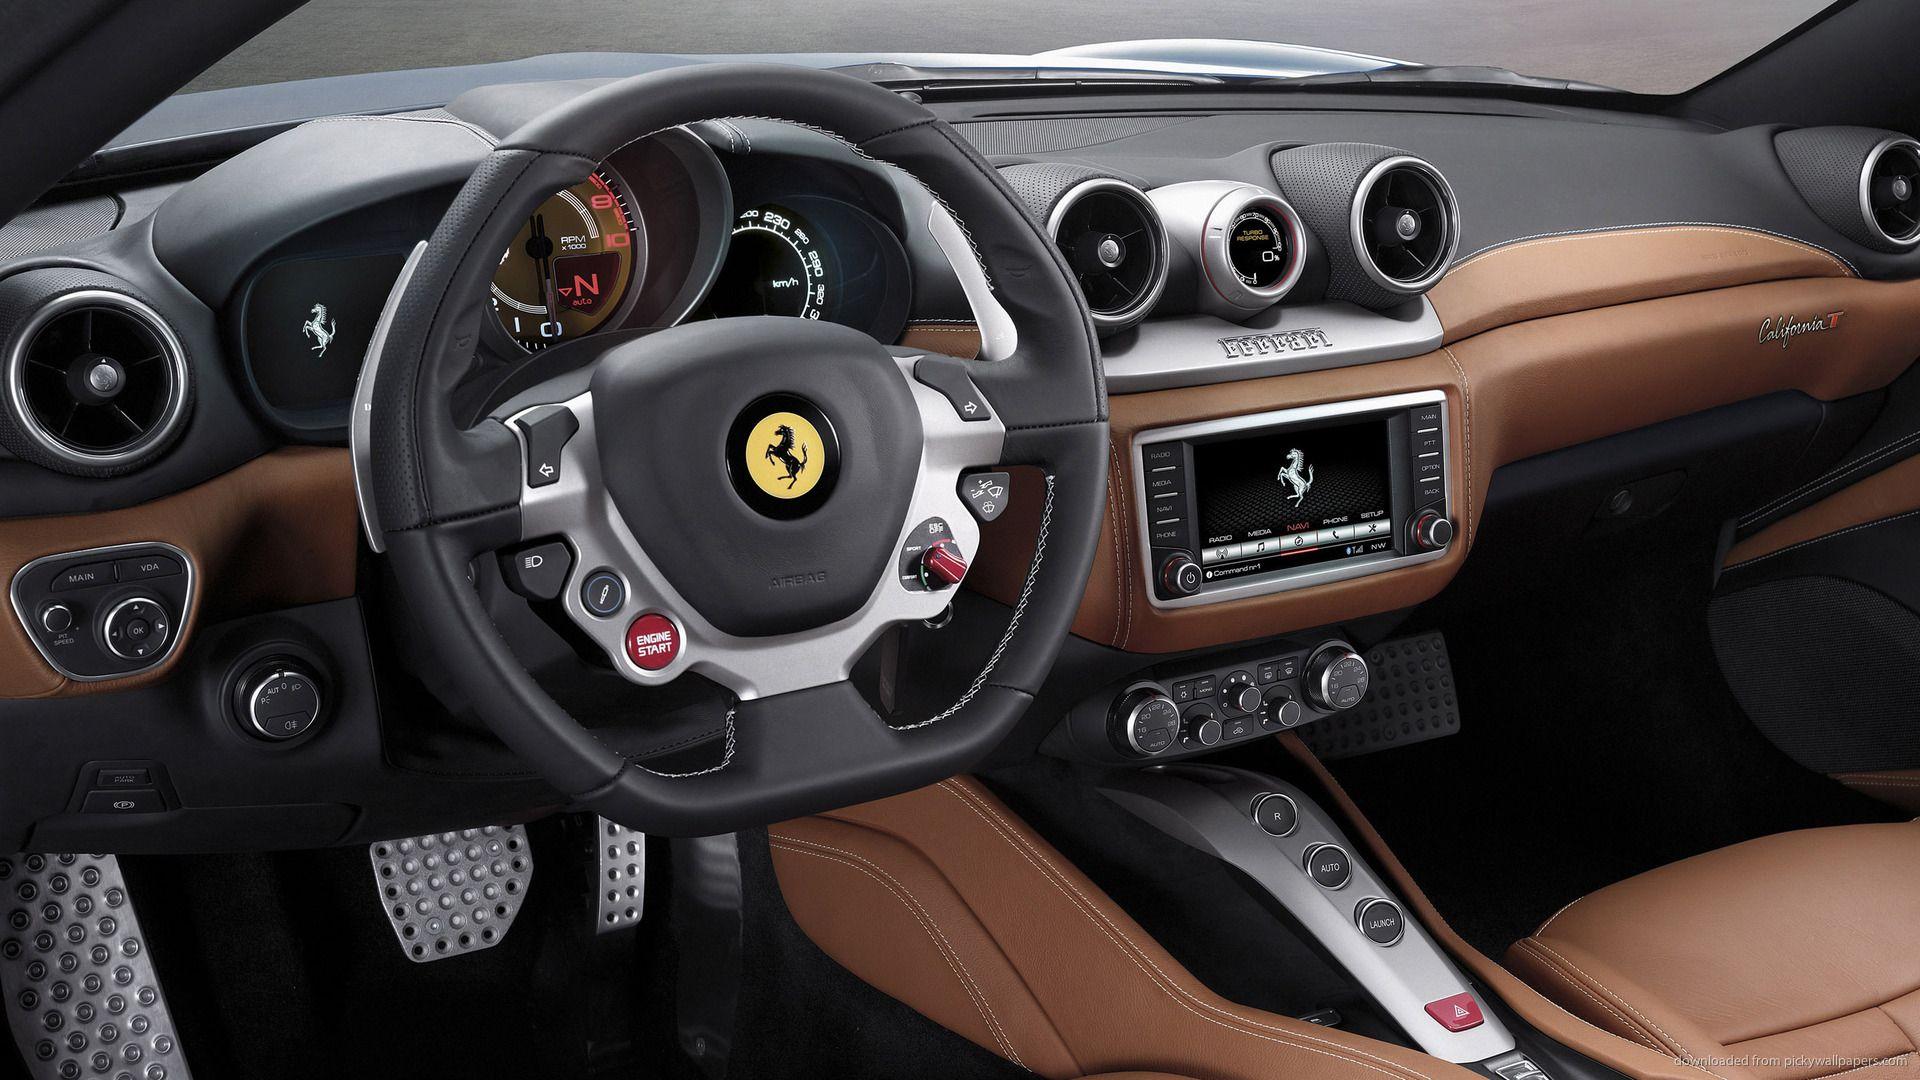 Download 1920x1080 Ferrari California T Steering Wheel Wallpaper